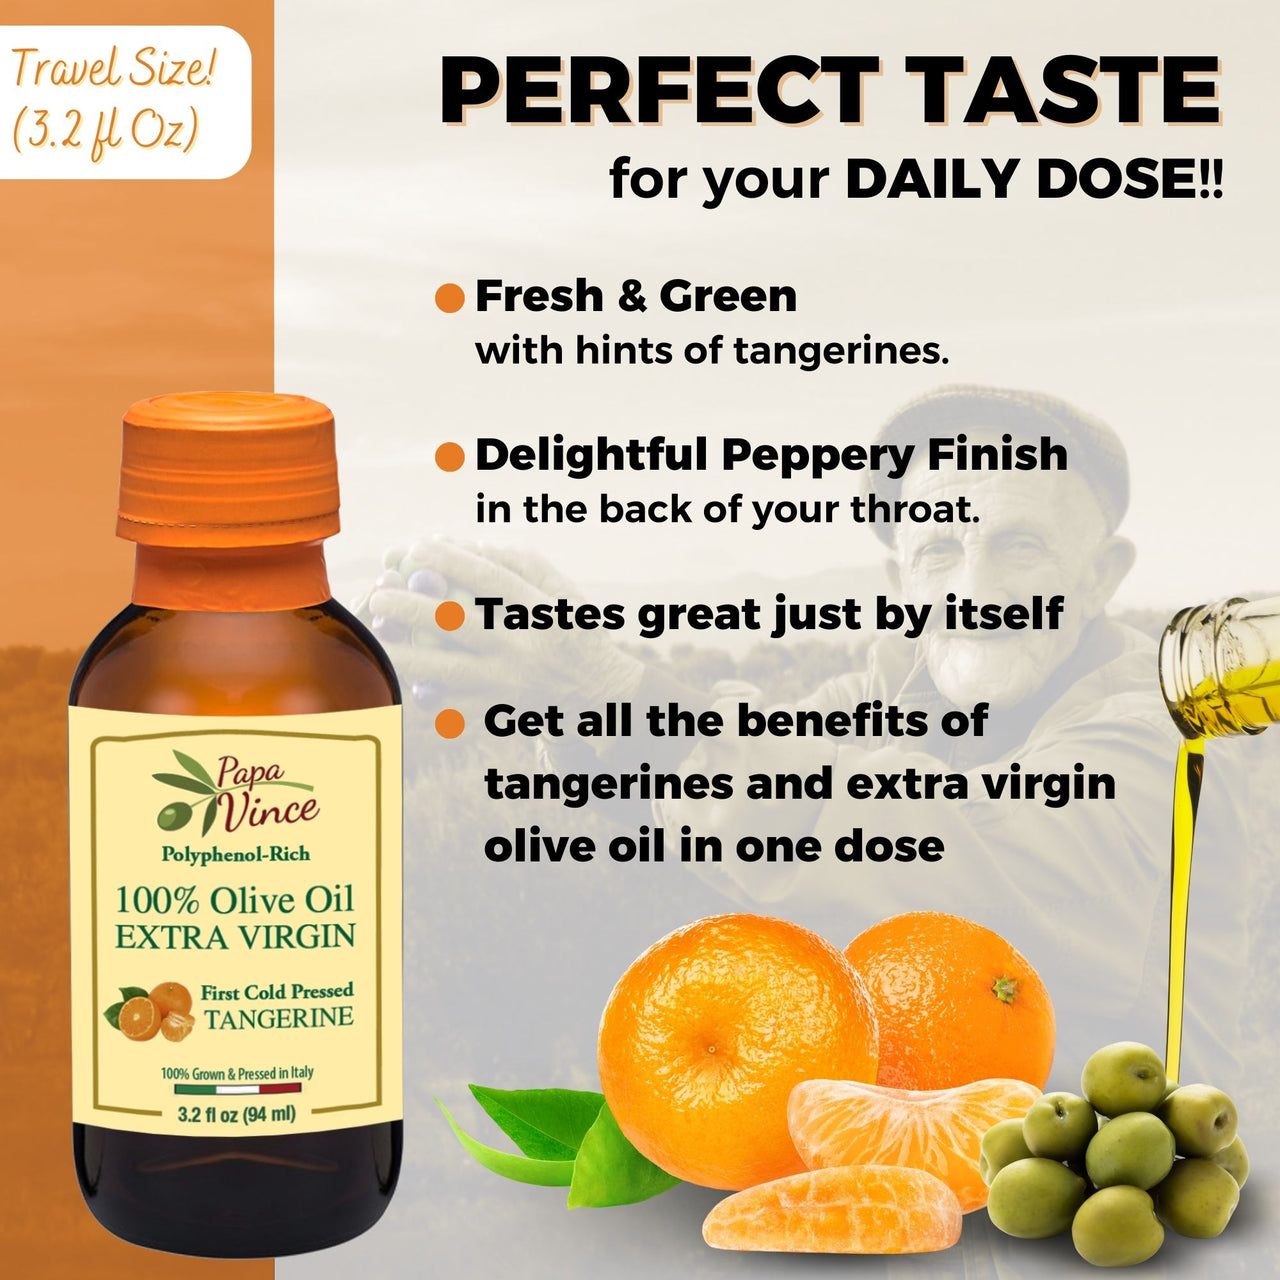 Now Foods - Essential Oils, Tangerine, 1 fl oz (30 ml) - 2 Packs